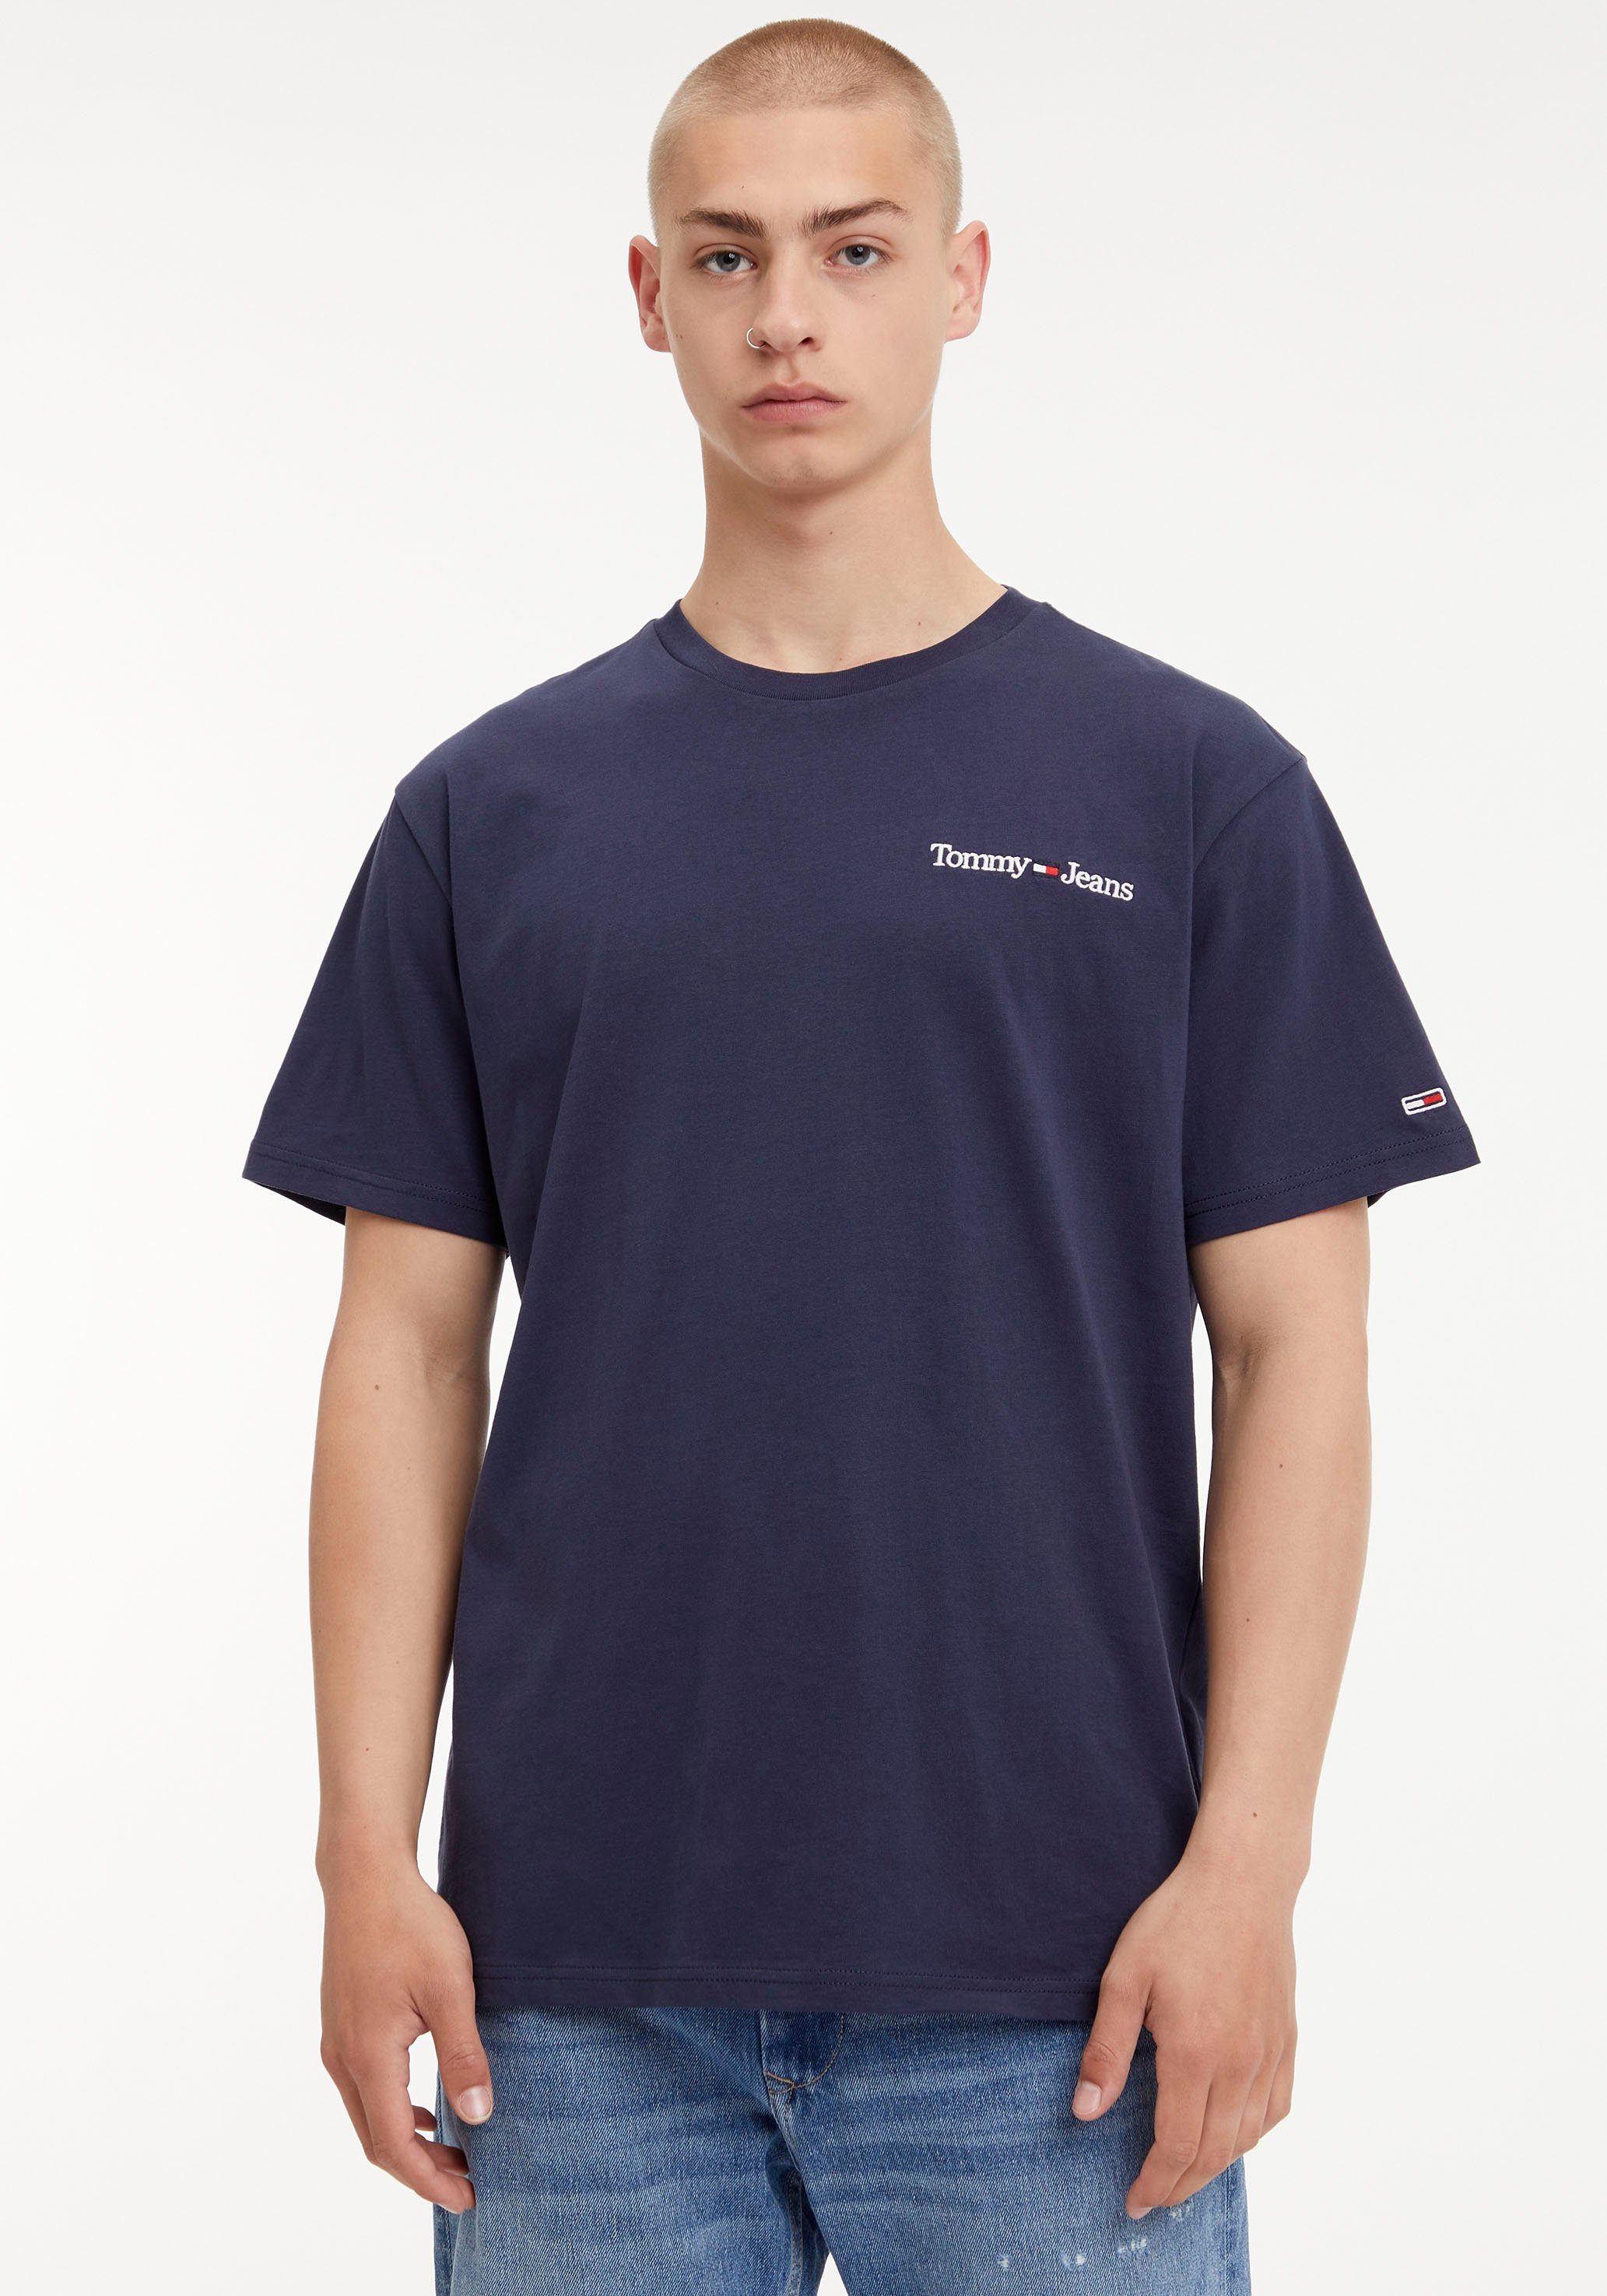 LINEAR Rundhalsausschnitt T-Shirt CHEST mit TEE Navy Twilight CLSC TJM Jeans Tommy